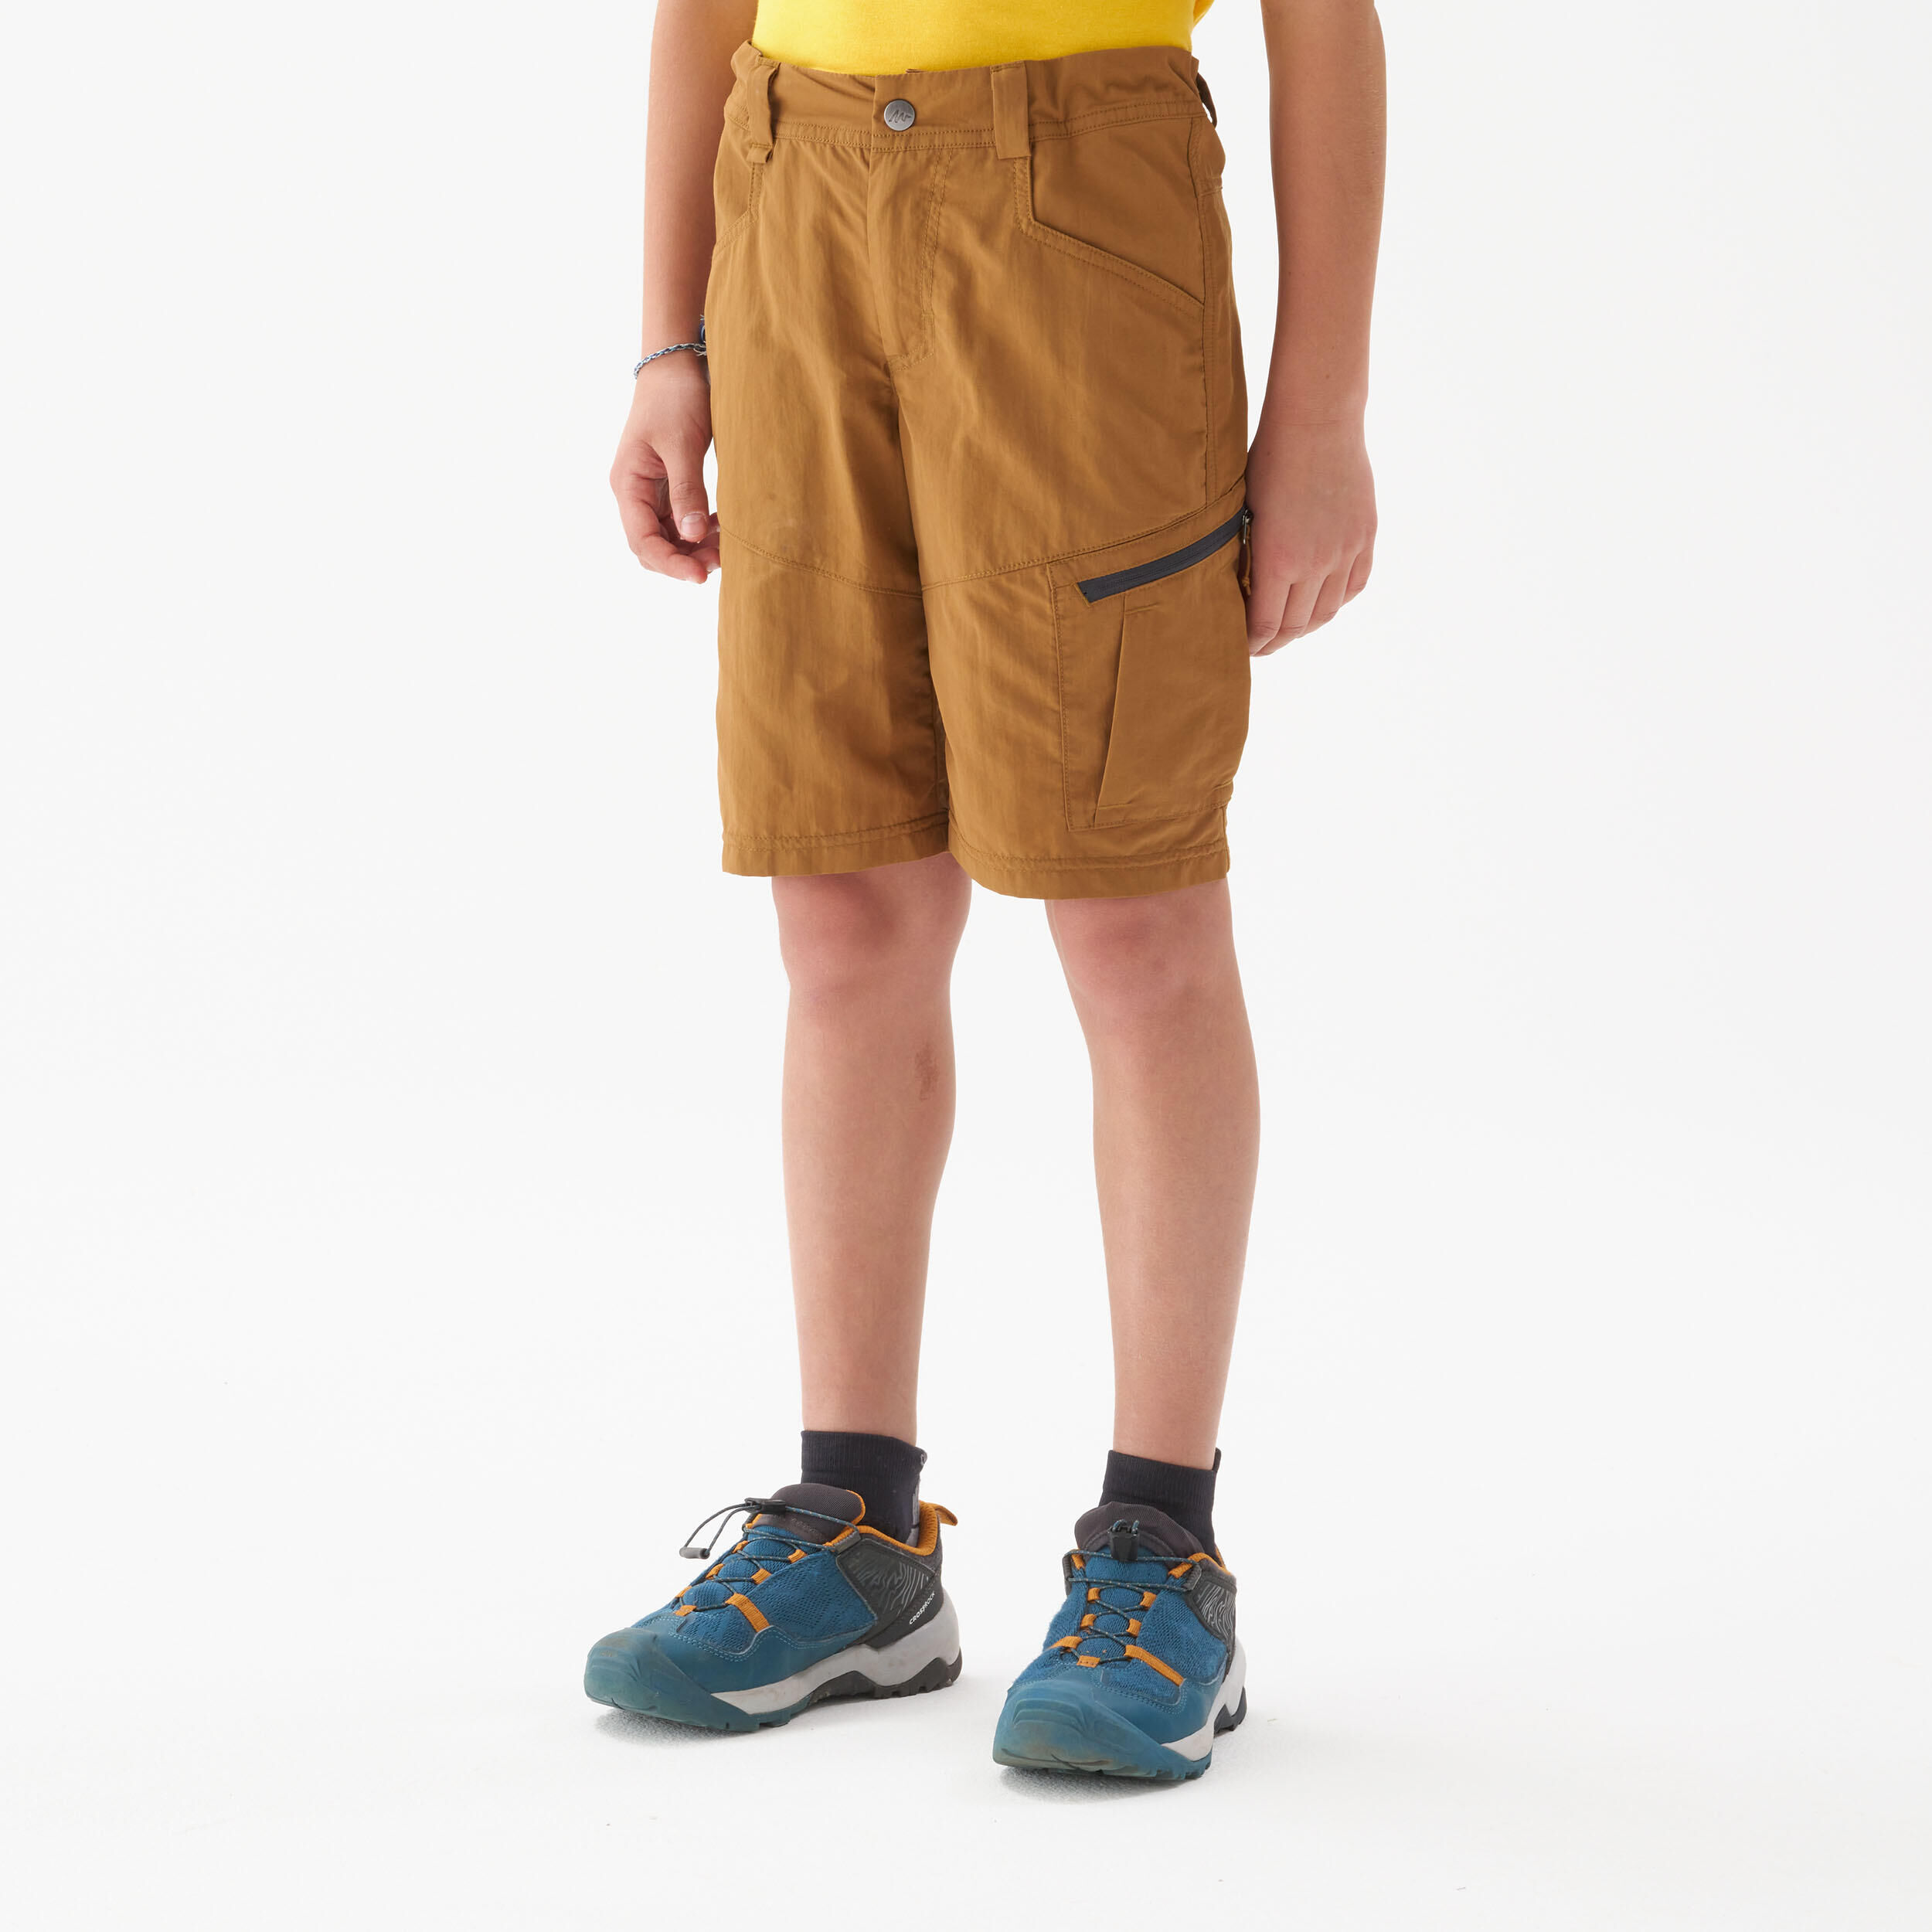 QUECHUA Child's hiking shorts - MH500 dark brown - 7-15 years